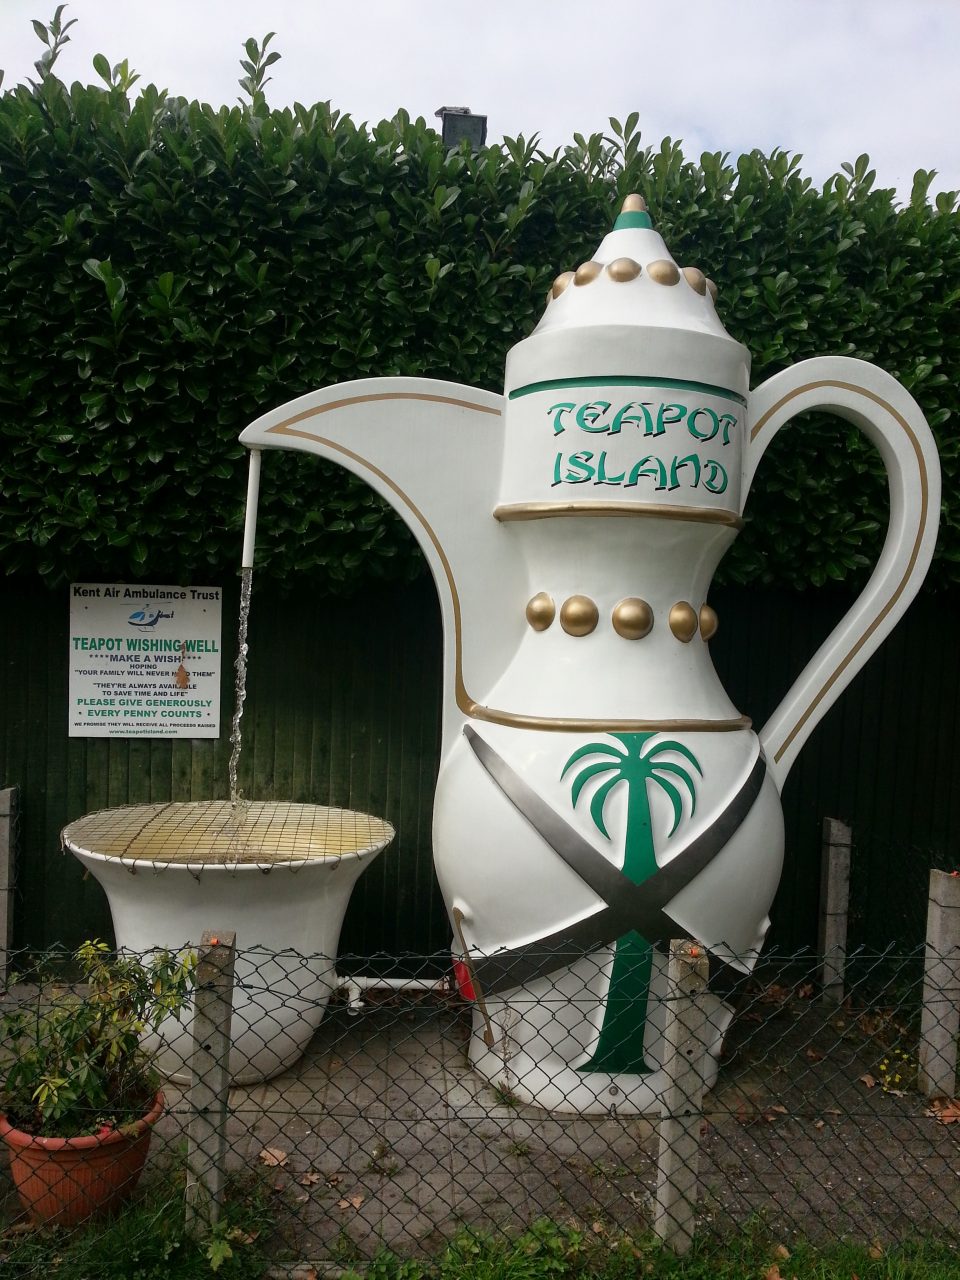 Teapot Island